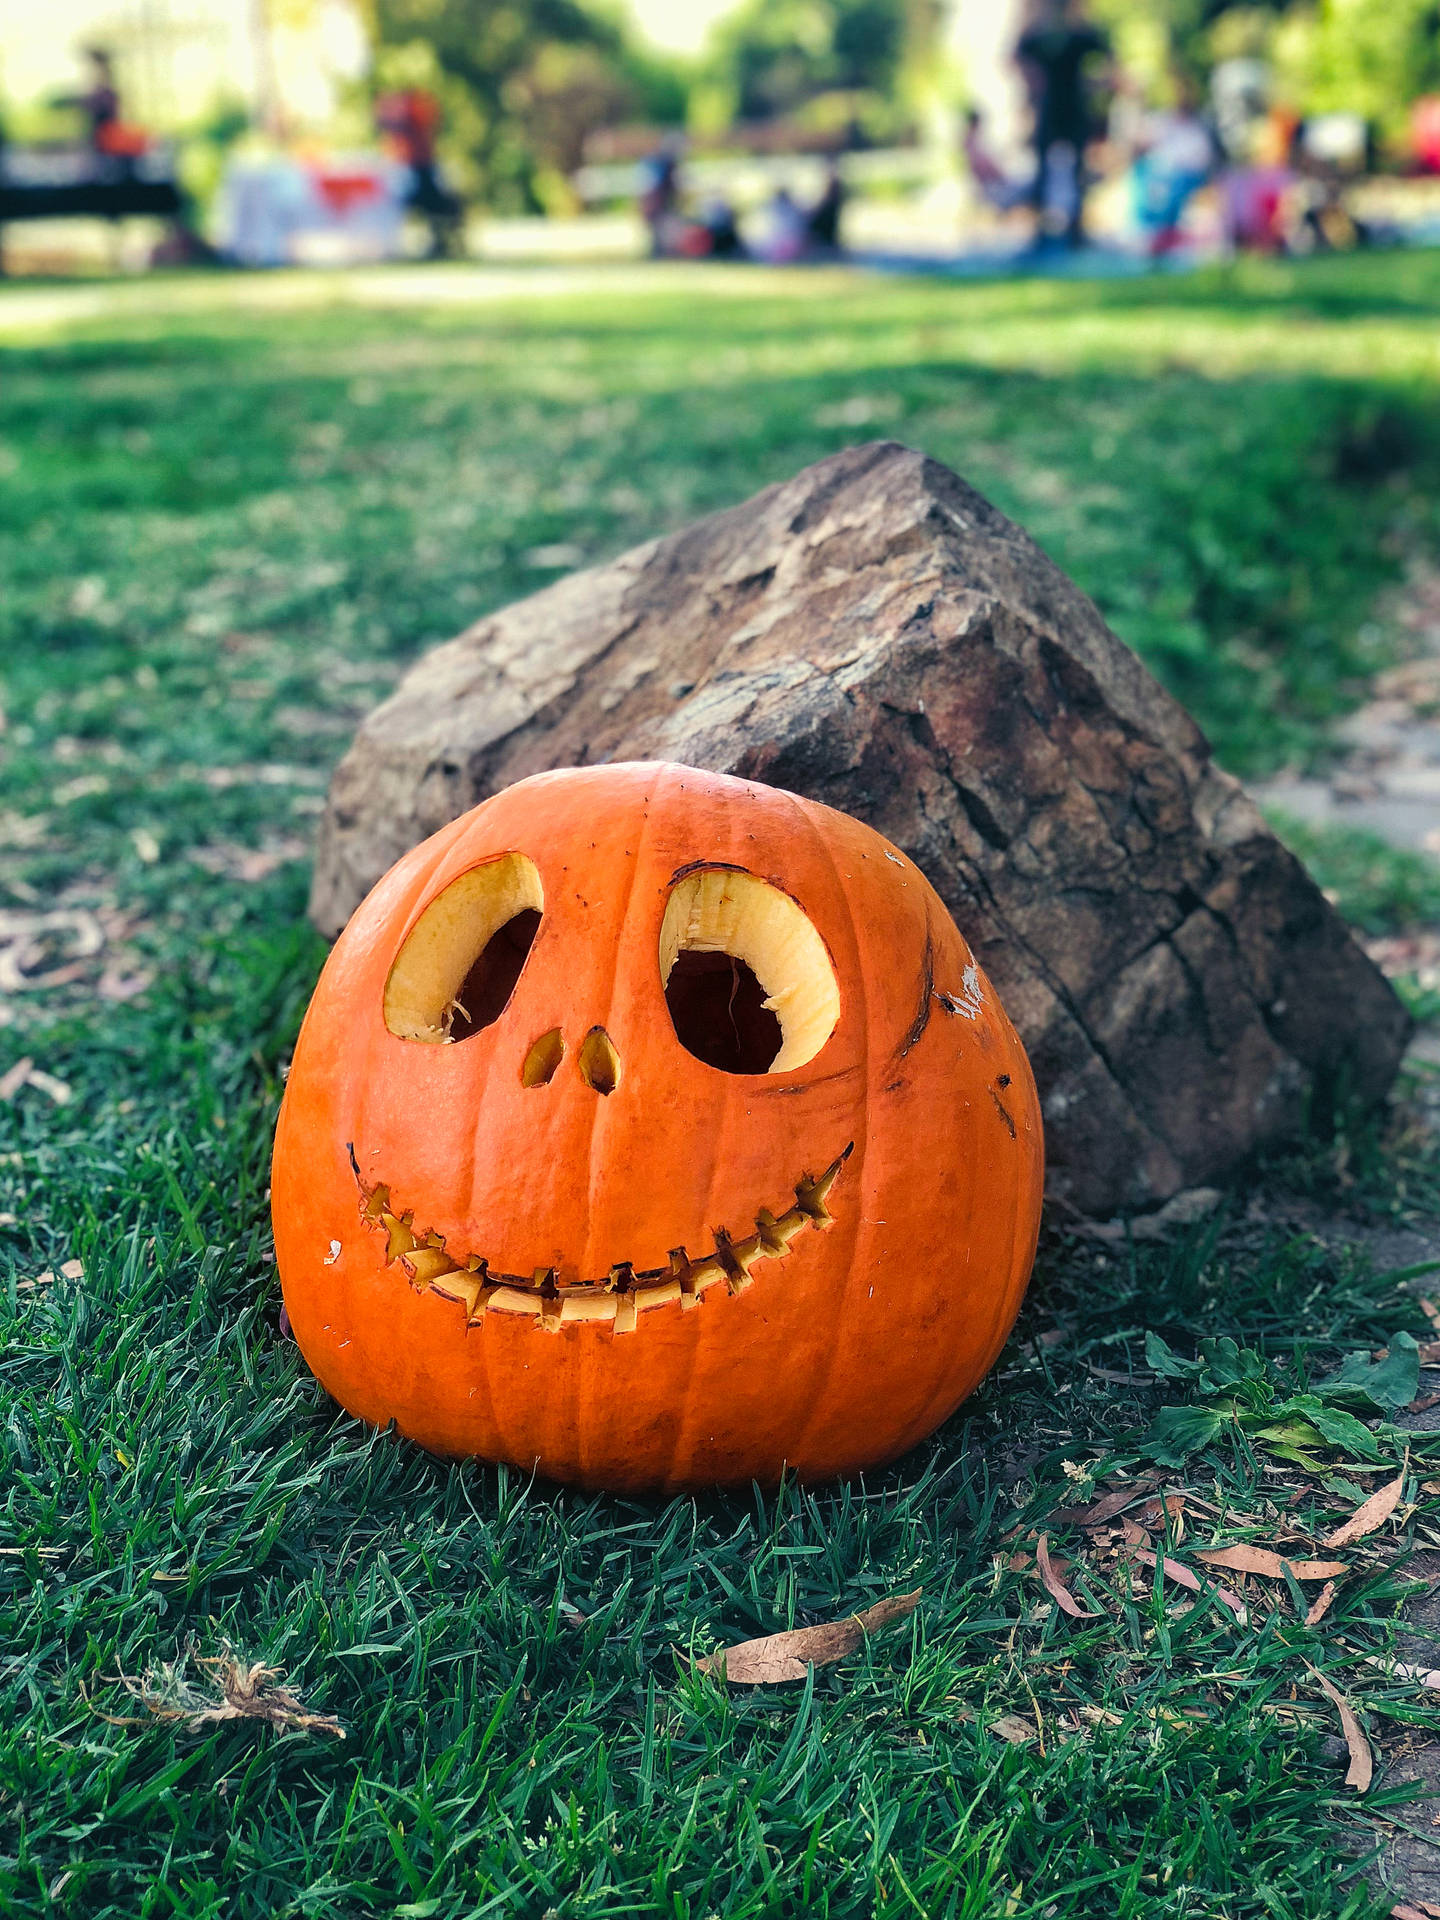 Cute Jack-o'-lantern Pumpkin